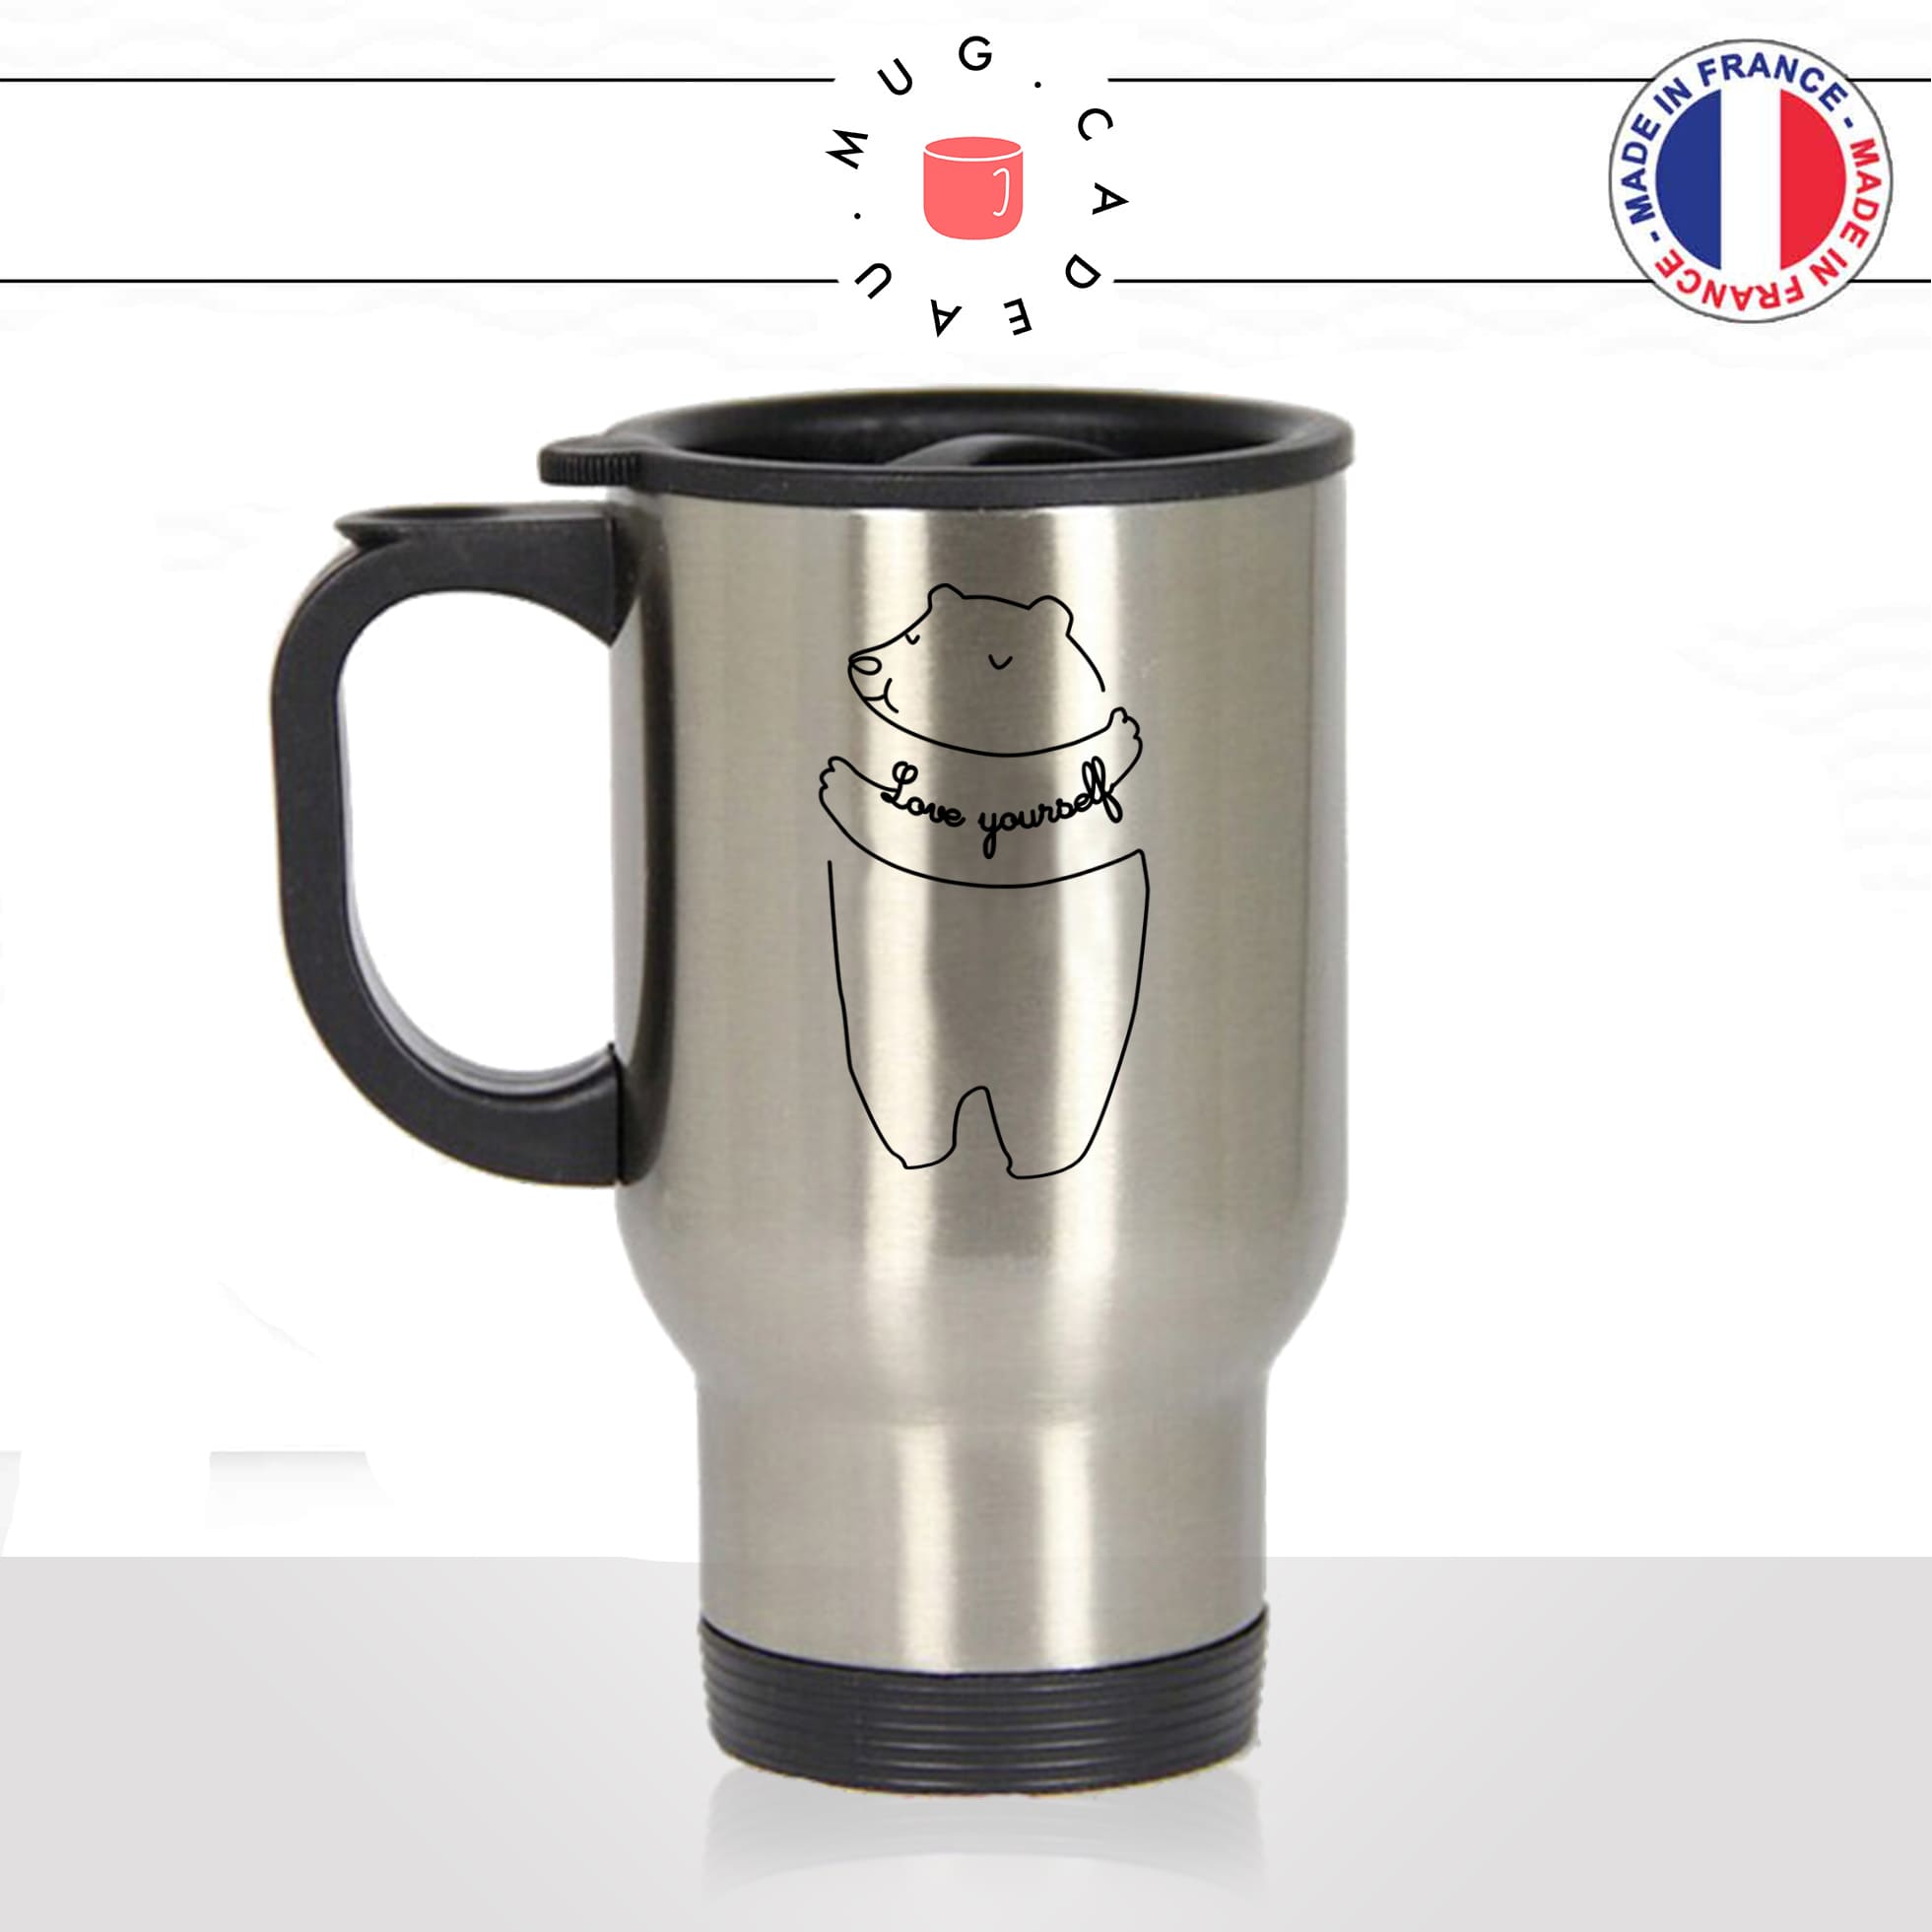 mug-tasse-thermos-voyage-ours-blanc-love-yourself-dessin-amour-calin-mignon-fun-cool-idée-cadeau-original-café-thé-chocolat-chaud